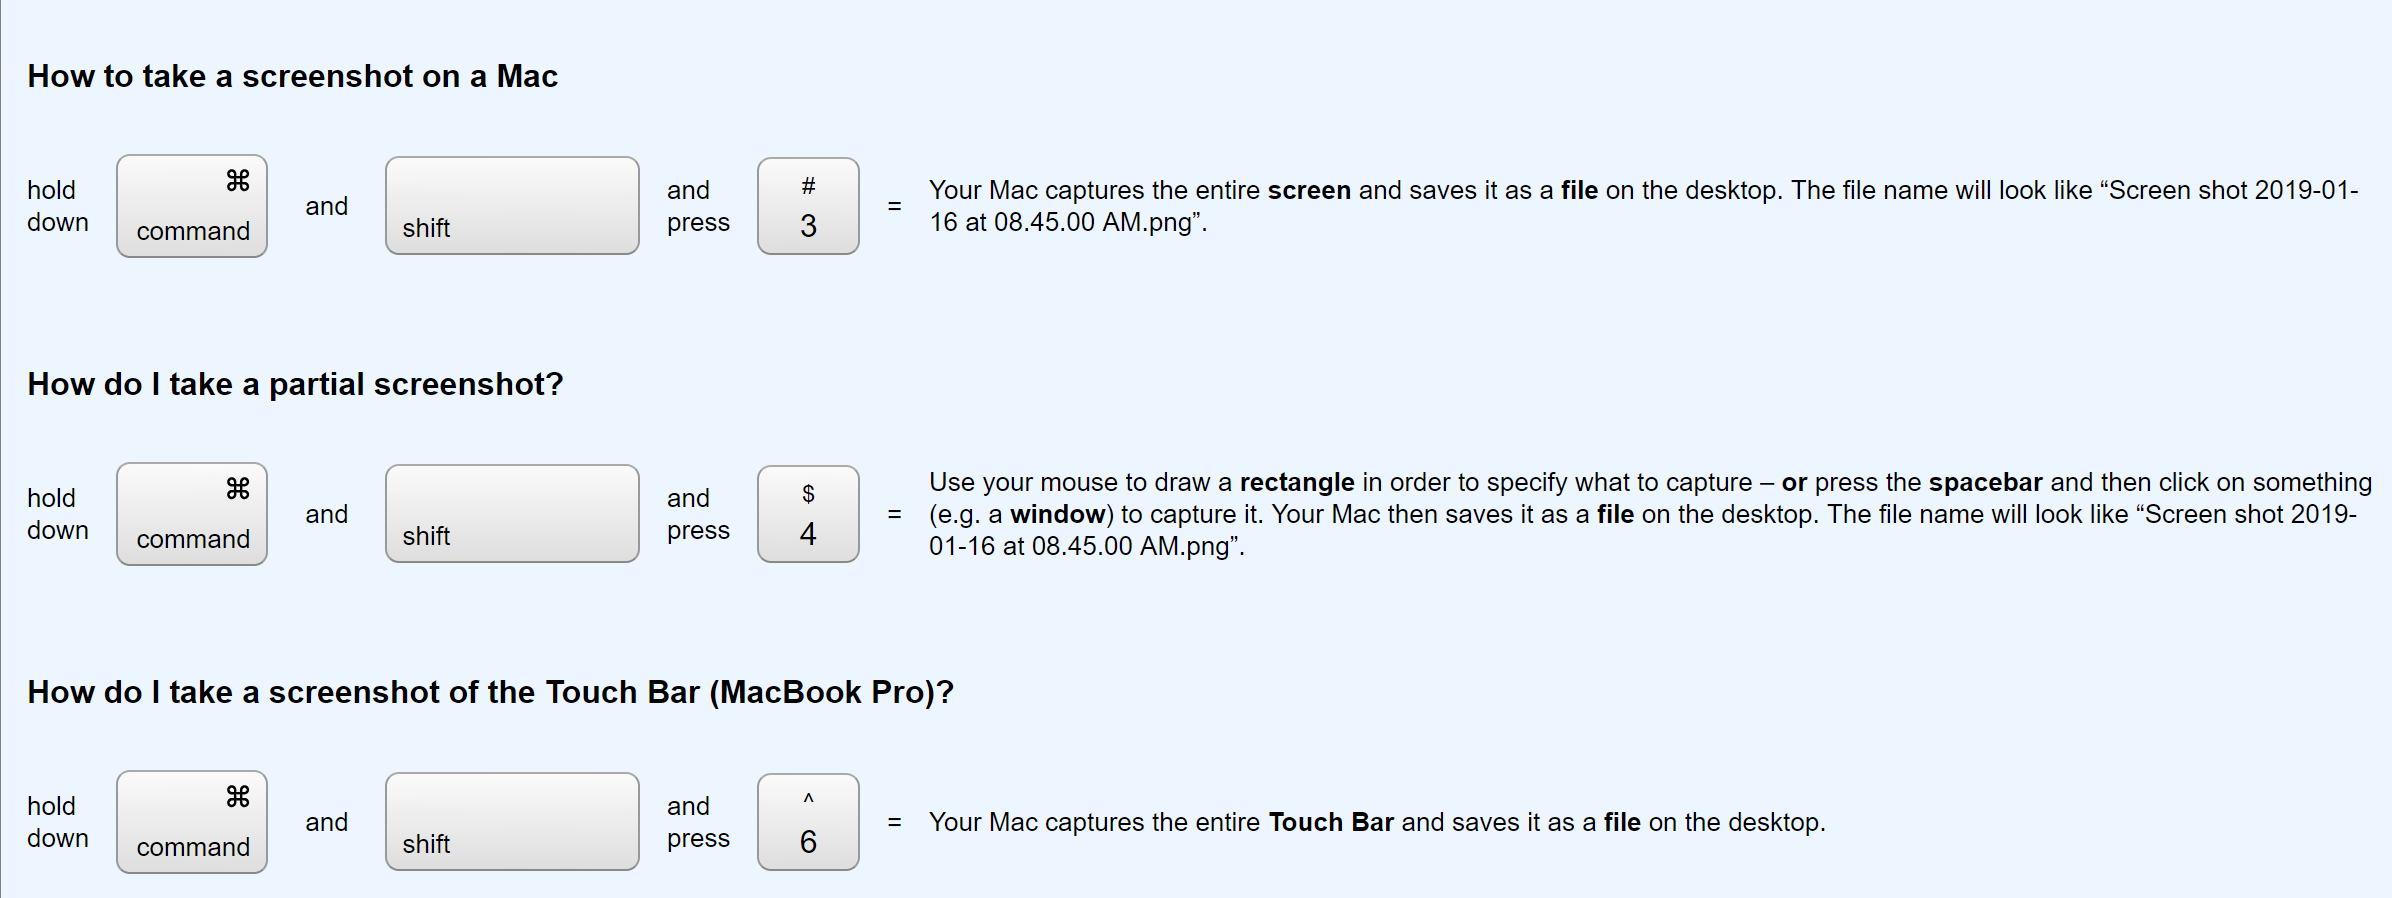 How to take a Screenshot on Mac